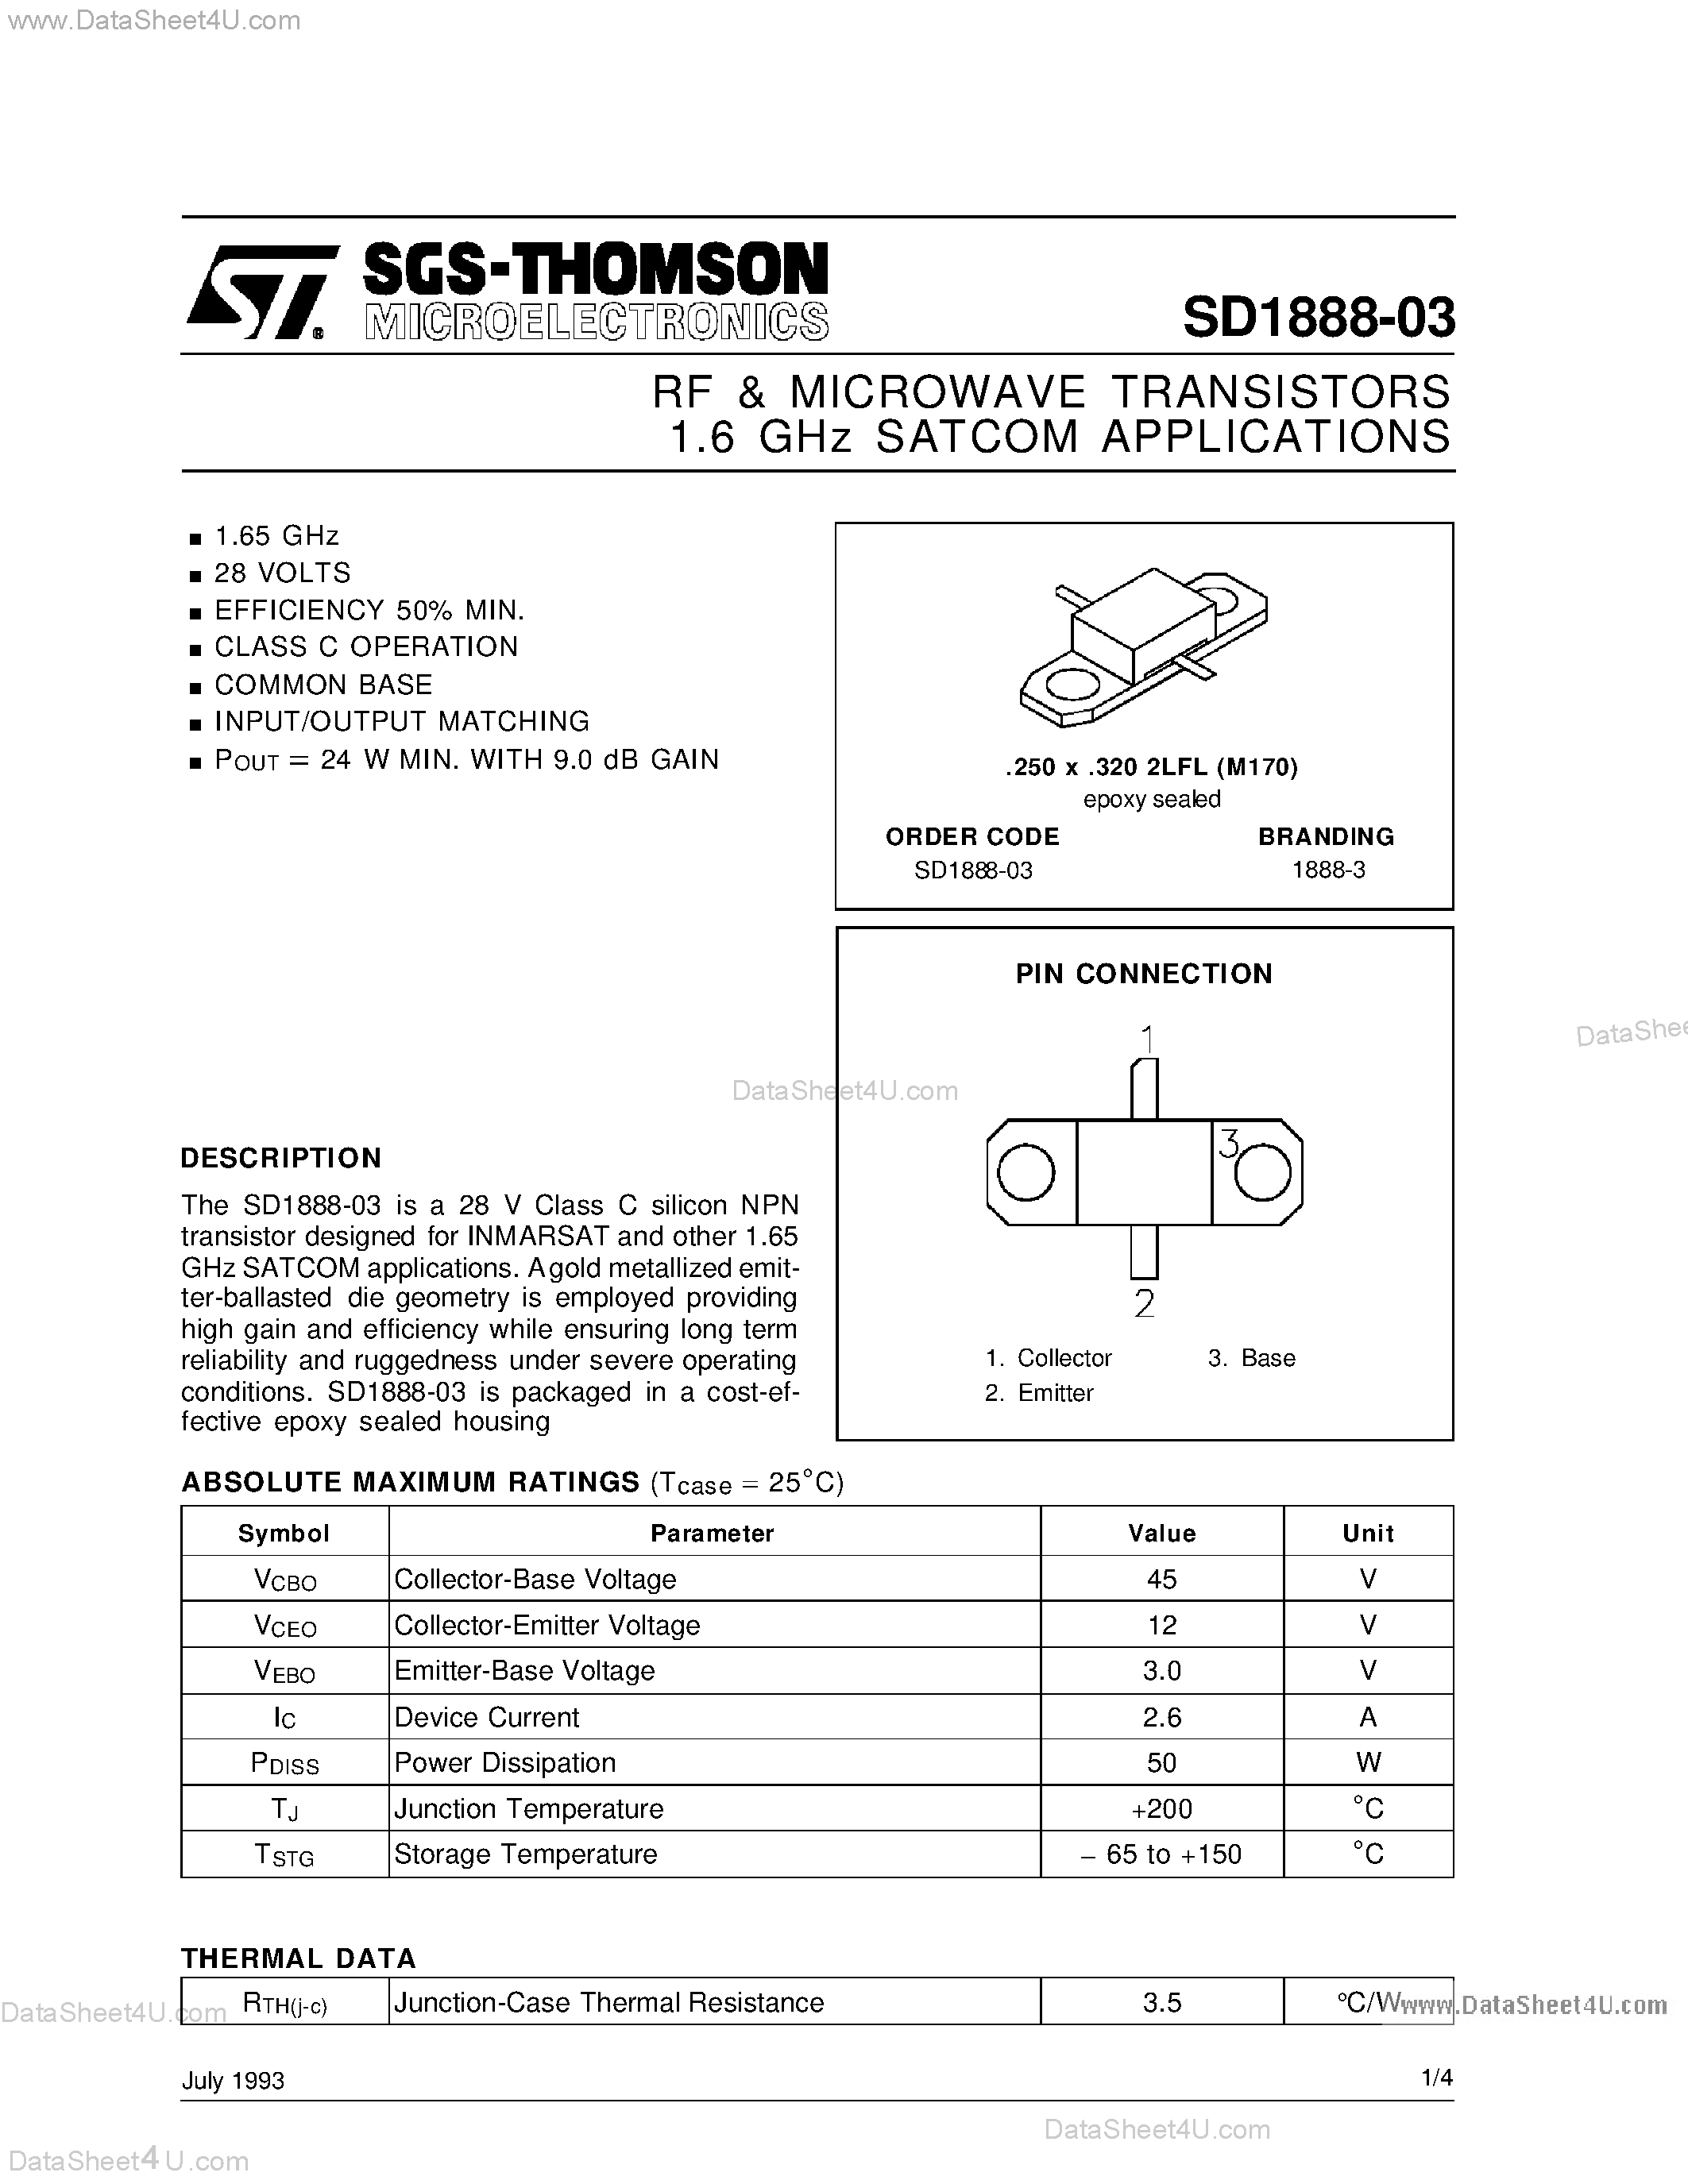 Даташит SD1888-03 - RF & MICROWAVE TRANSISTORS 1.6 GHz SATCOM APPLICATIONS страница 1